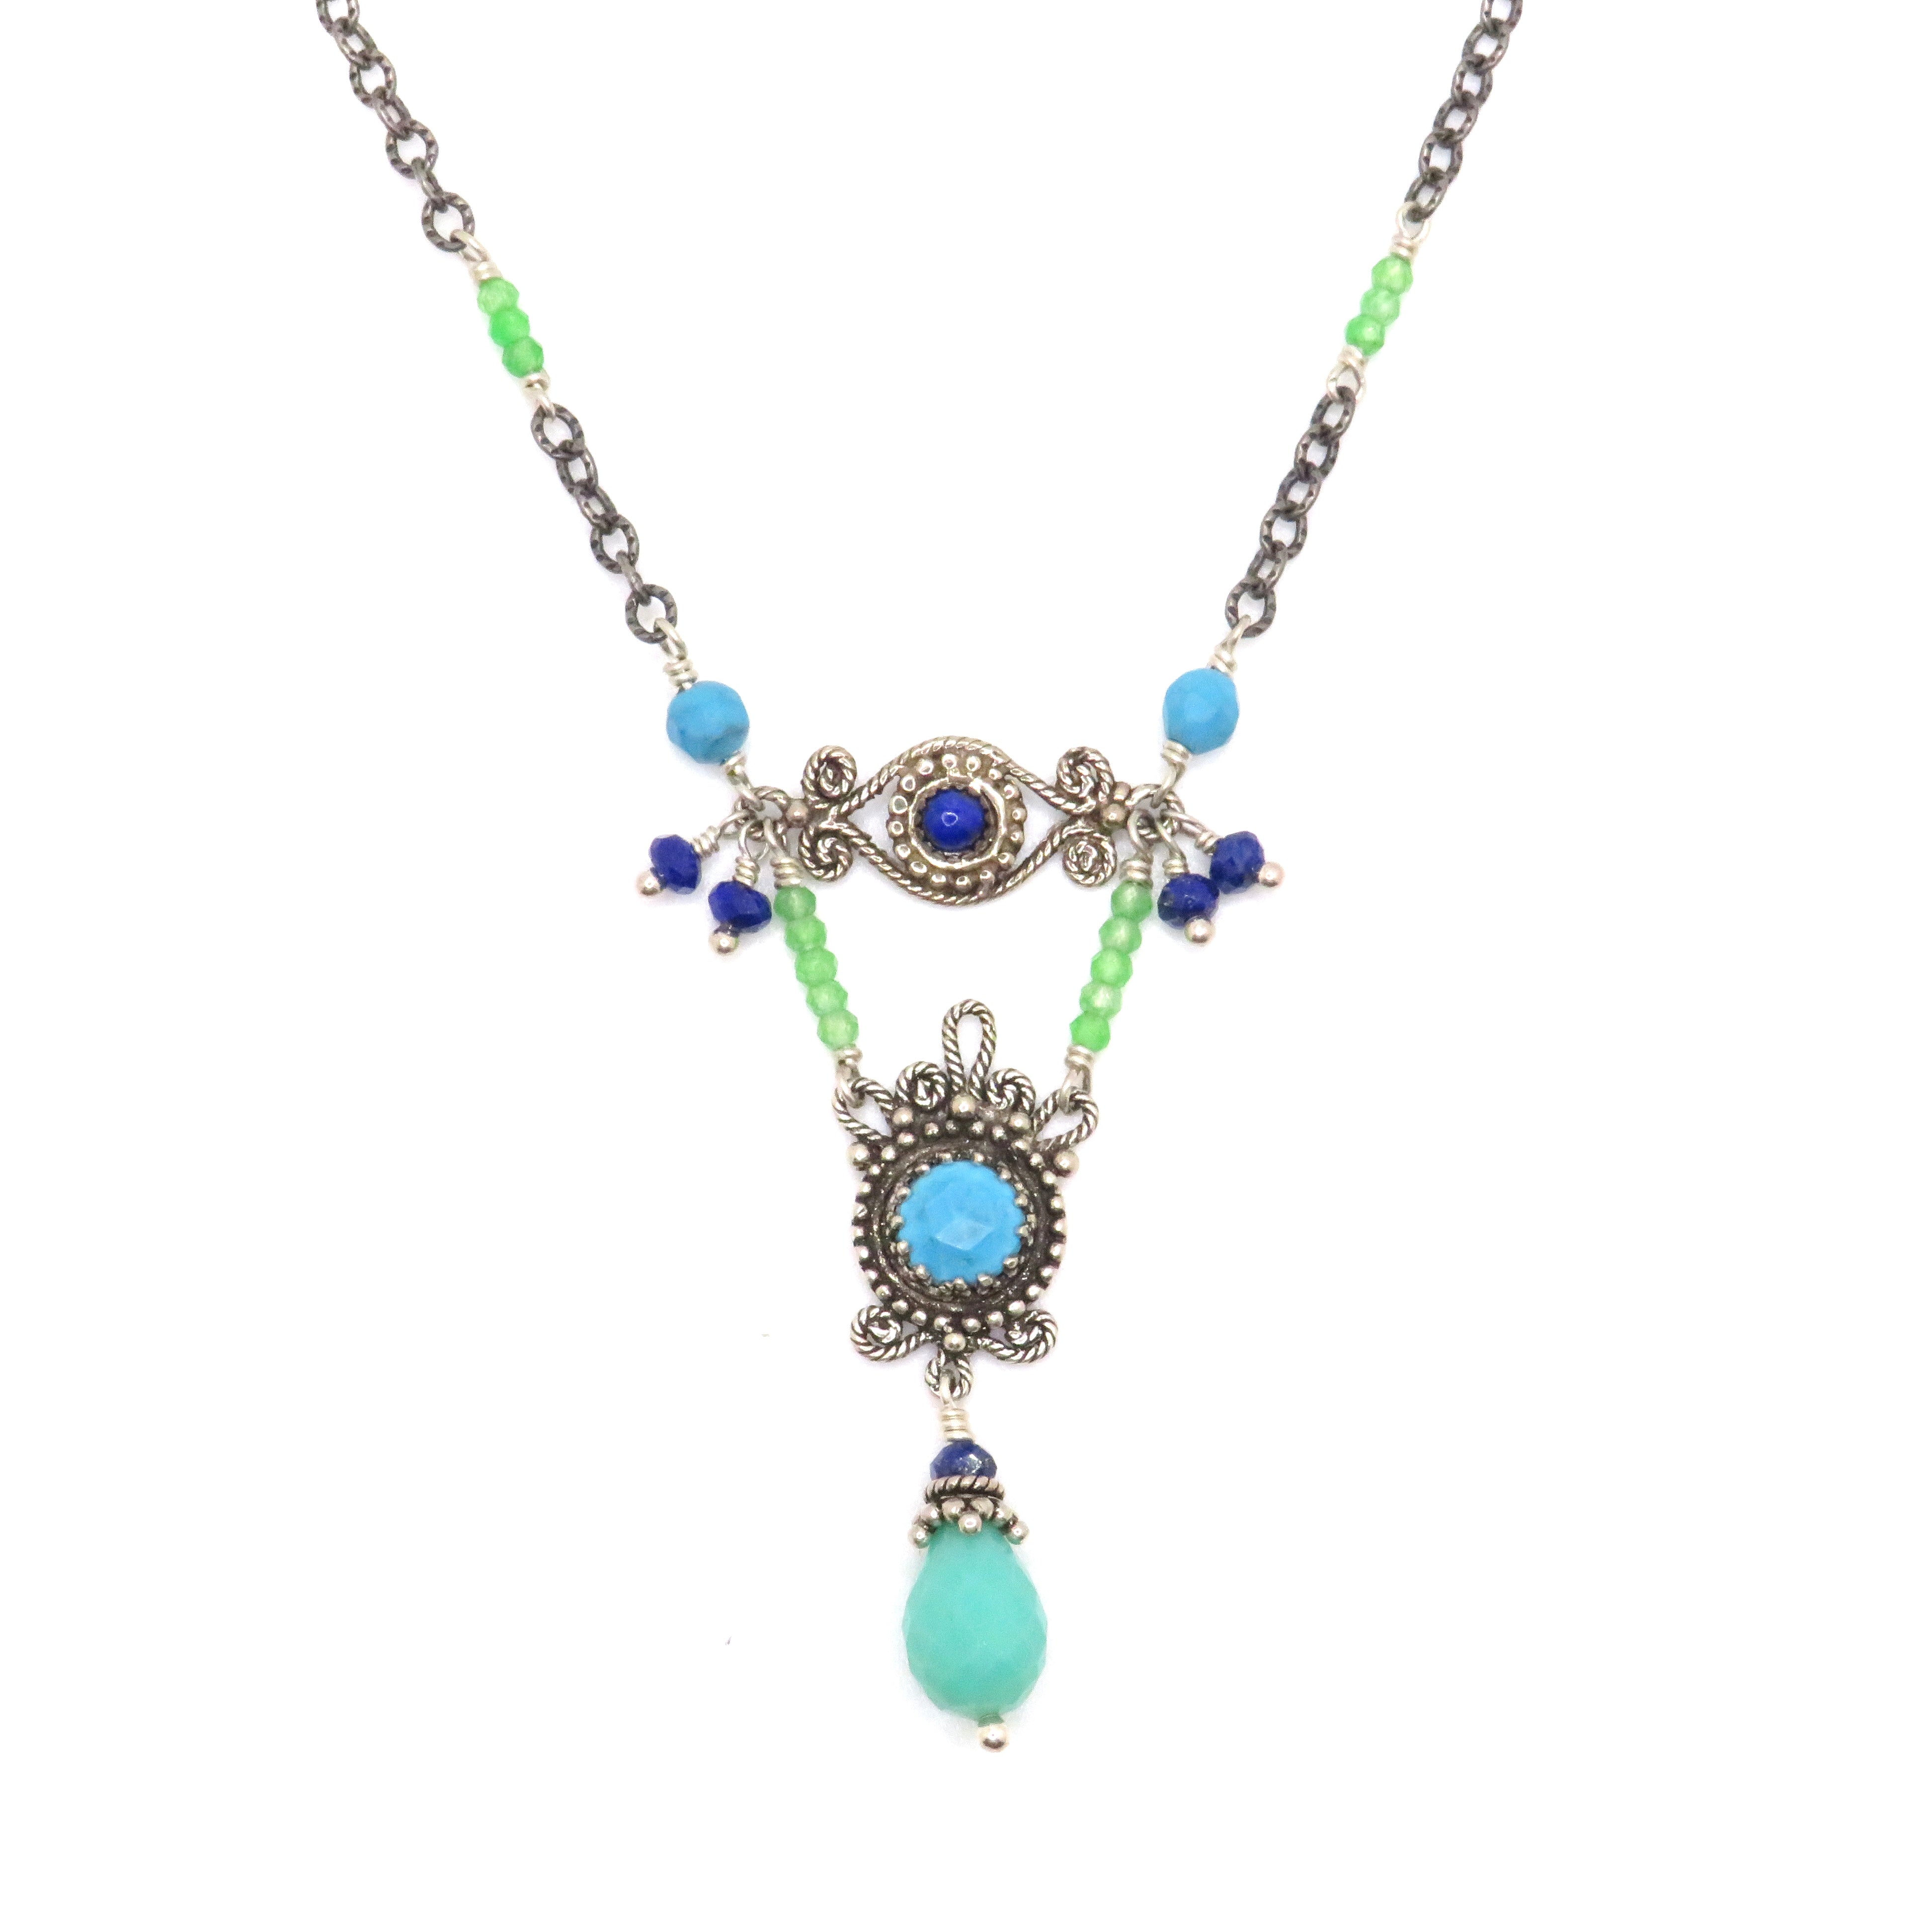 Turquoise beaded stone pendant necklace